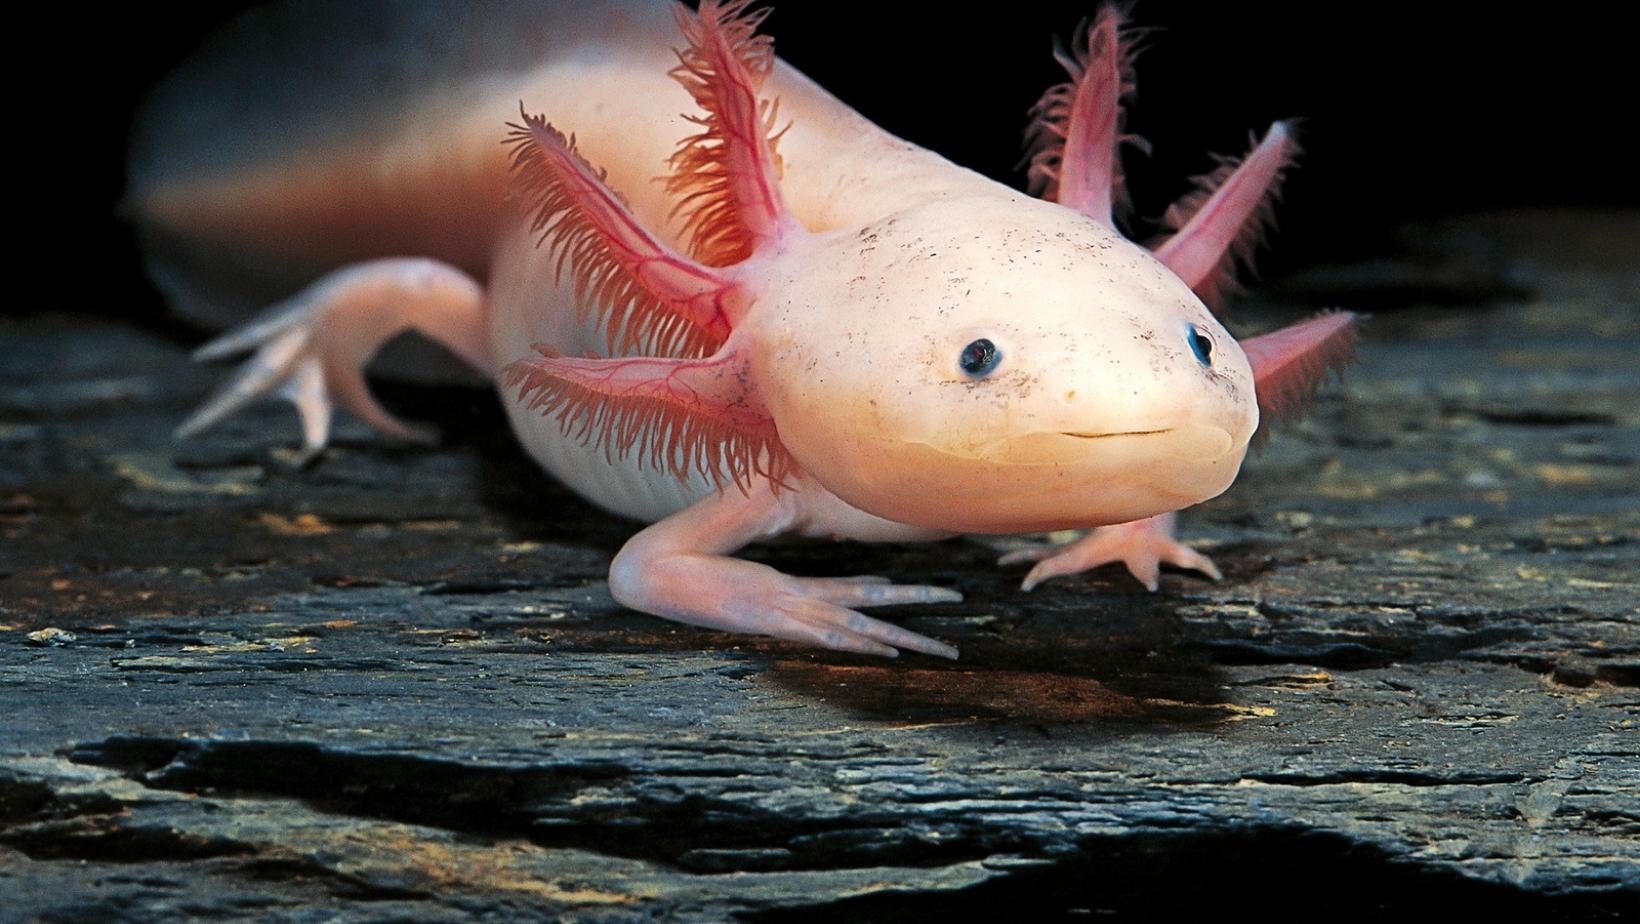 Adorable pink sea animals